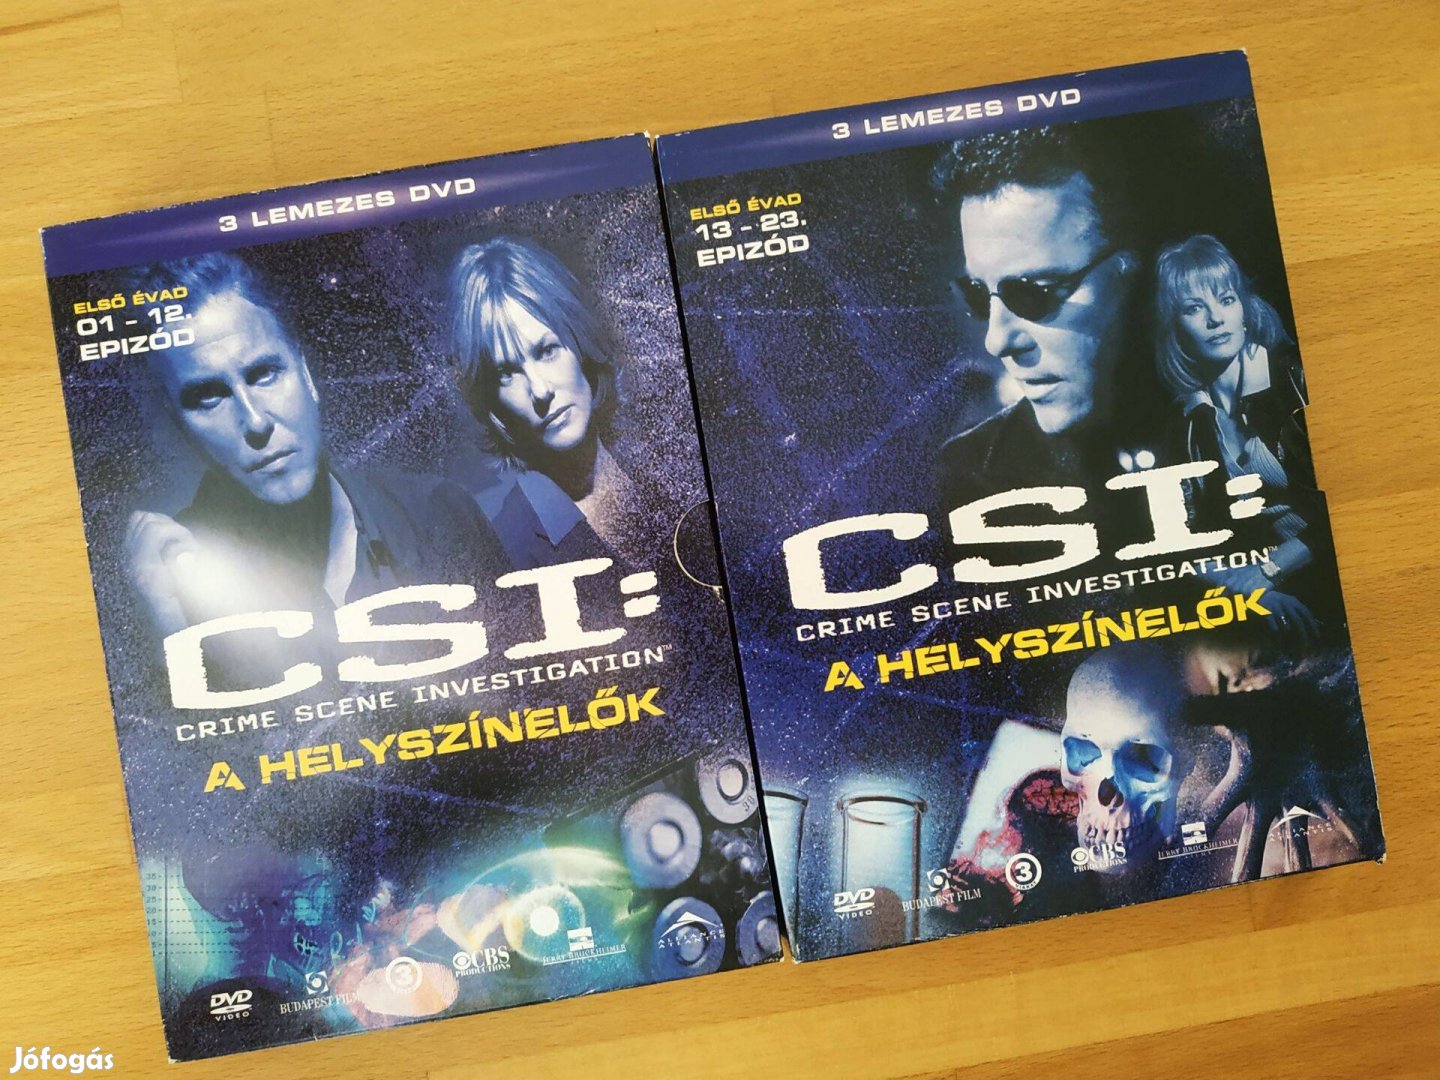 CSI: Crime Scene Investigation - A helyszínelők - 1. évad (6 DVD)